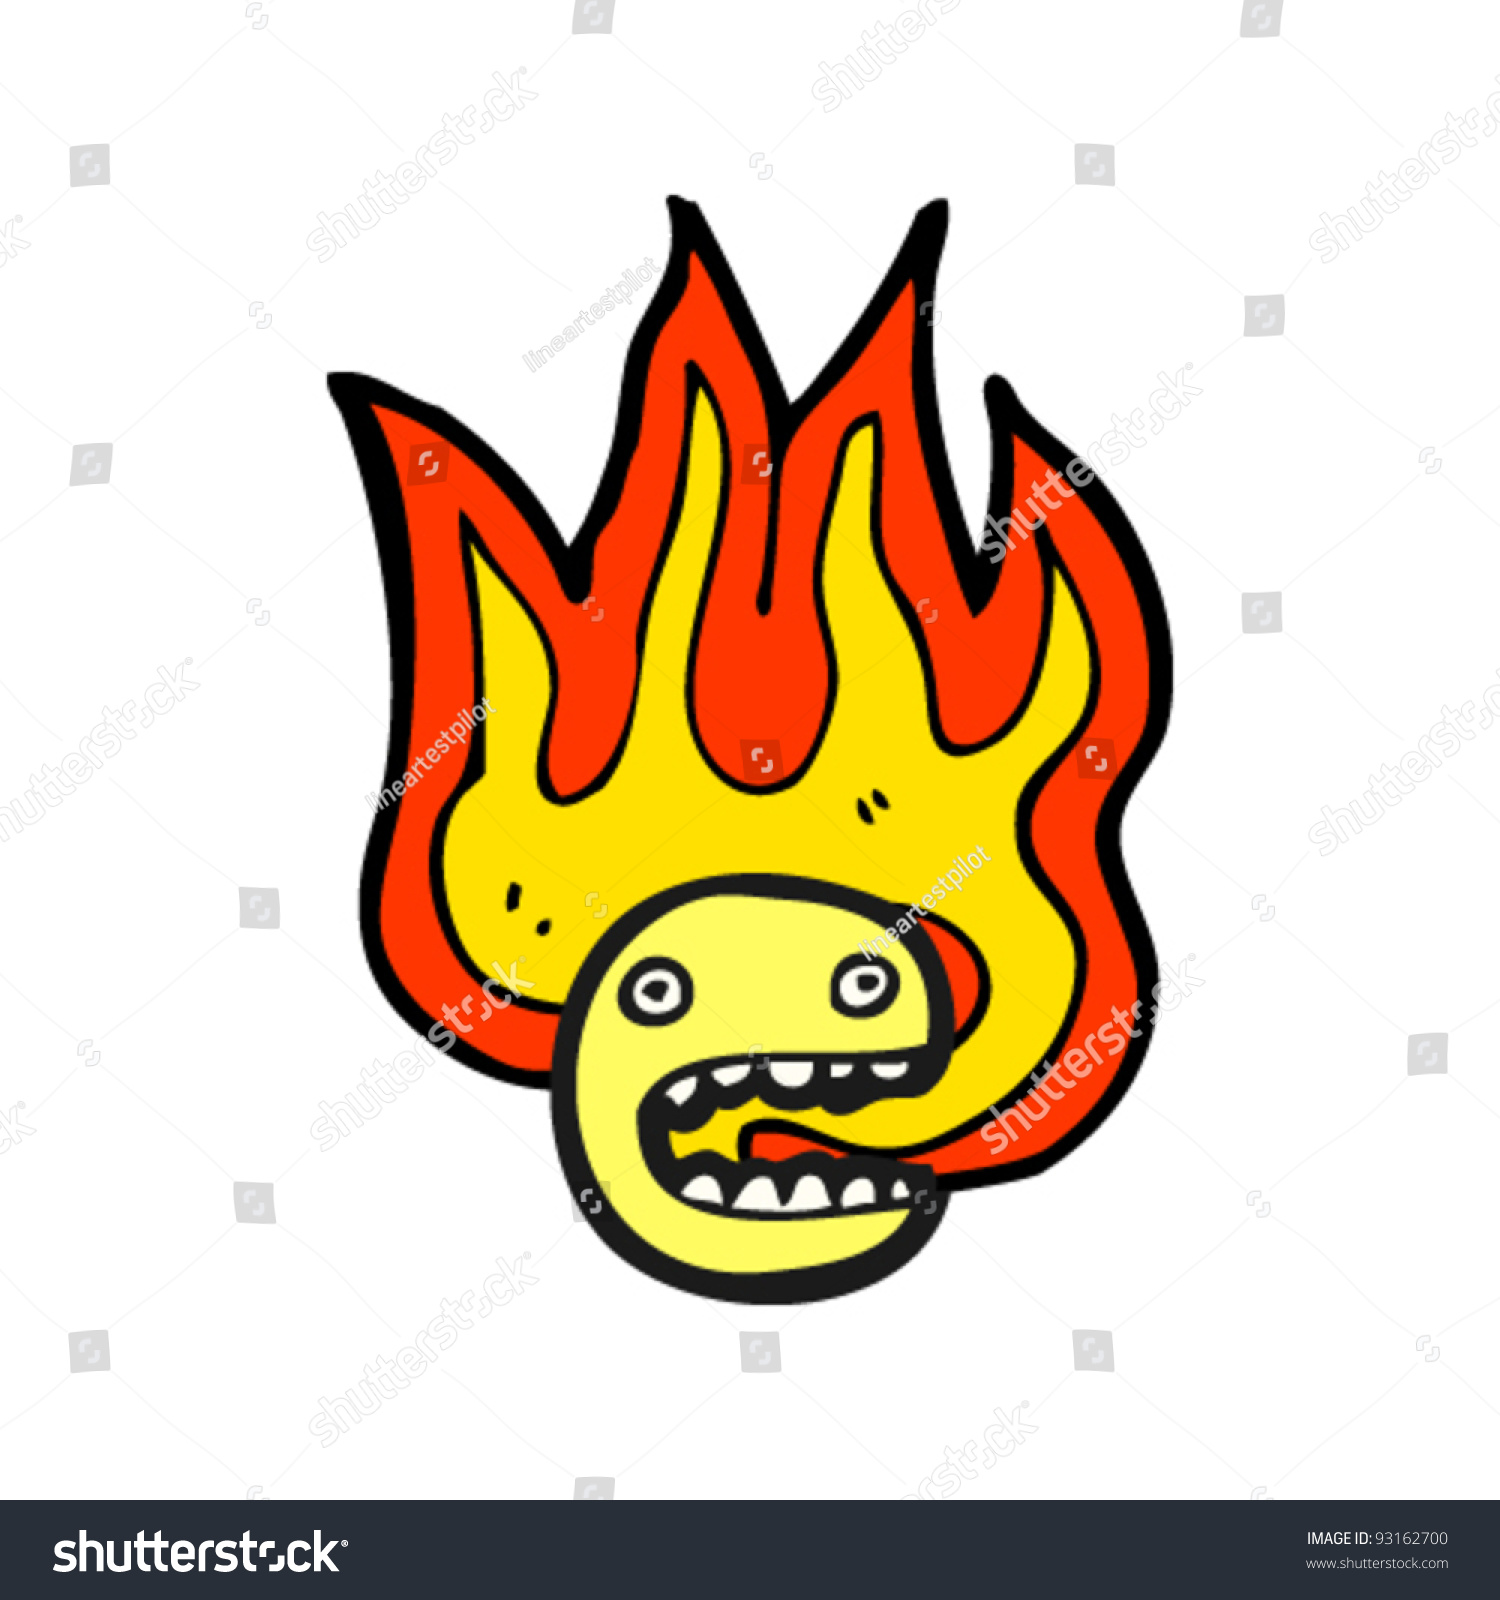 Flaming Emoticon Face Cartoon Stock Vector (Royalty Free) 93162700 ...